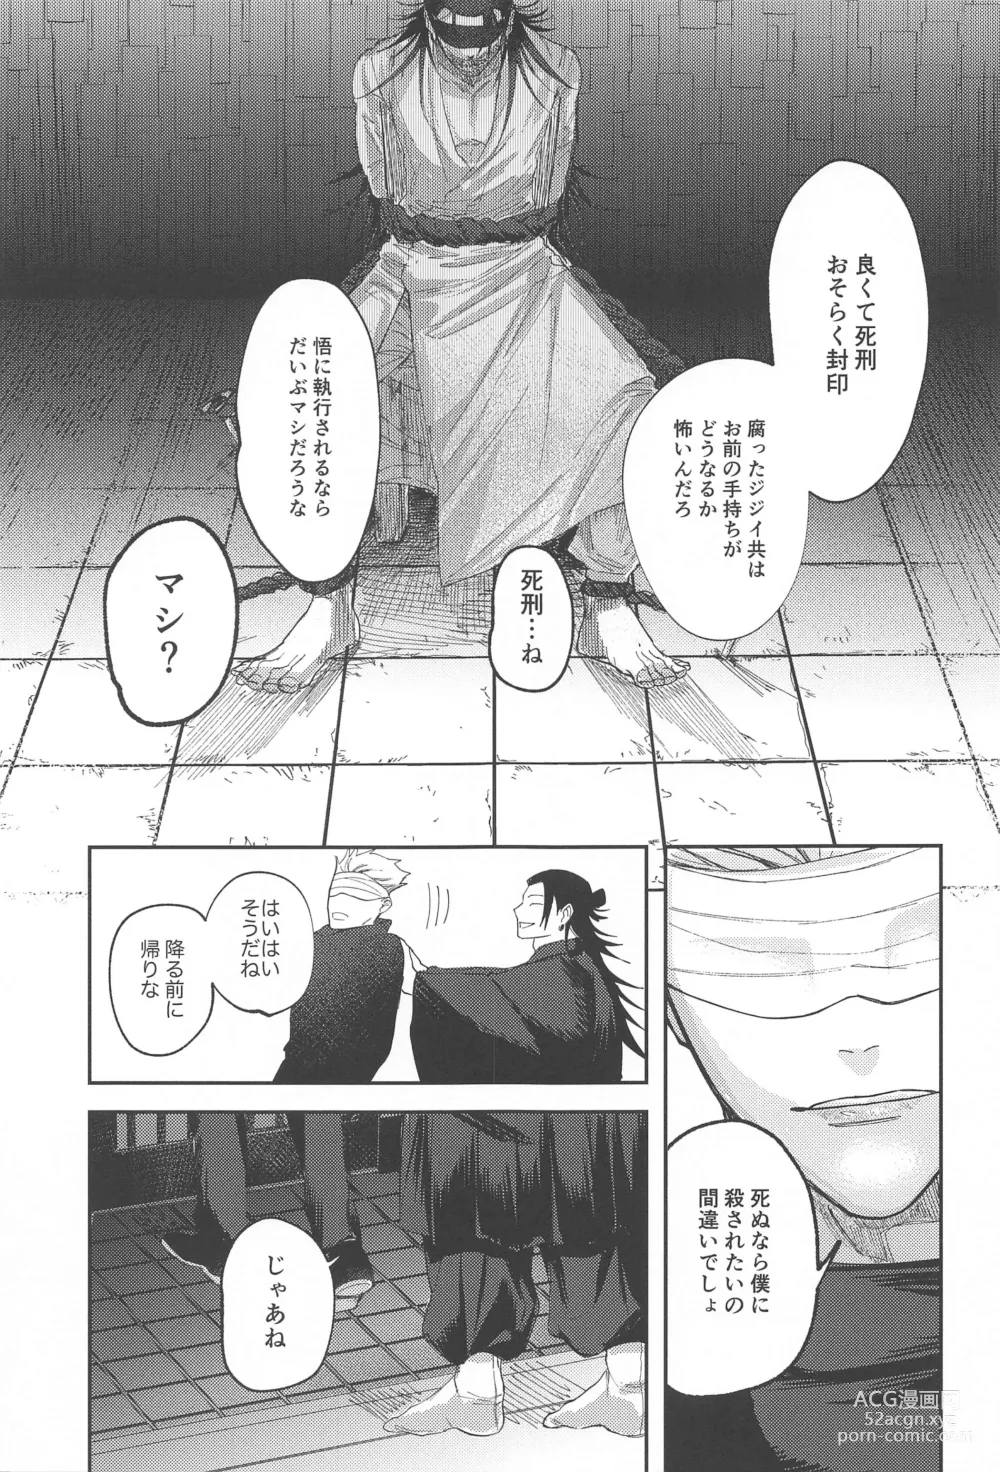 Page 16 of doujinshi Higatsuku Inazuma - Lightning that catches fire